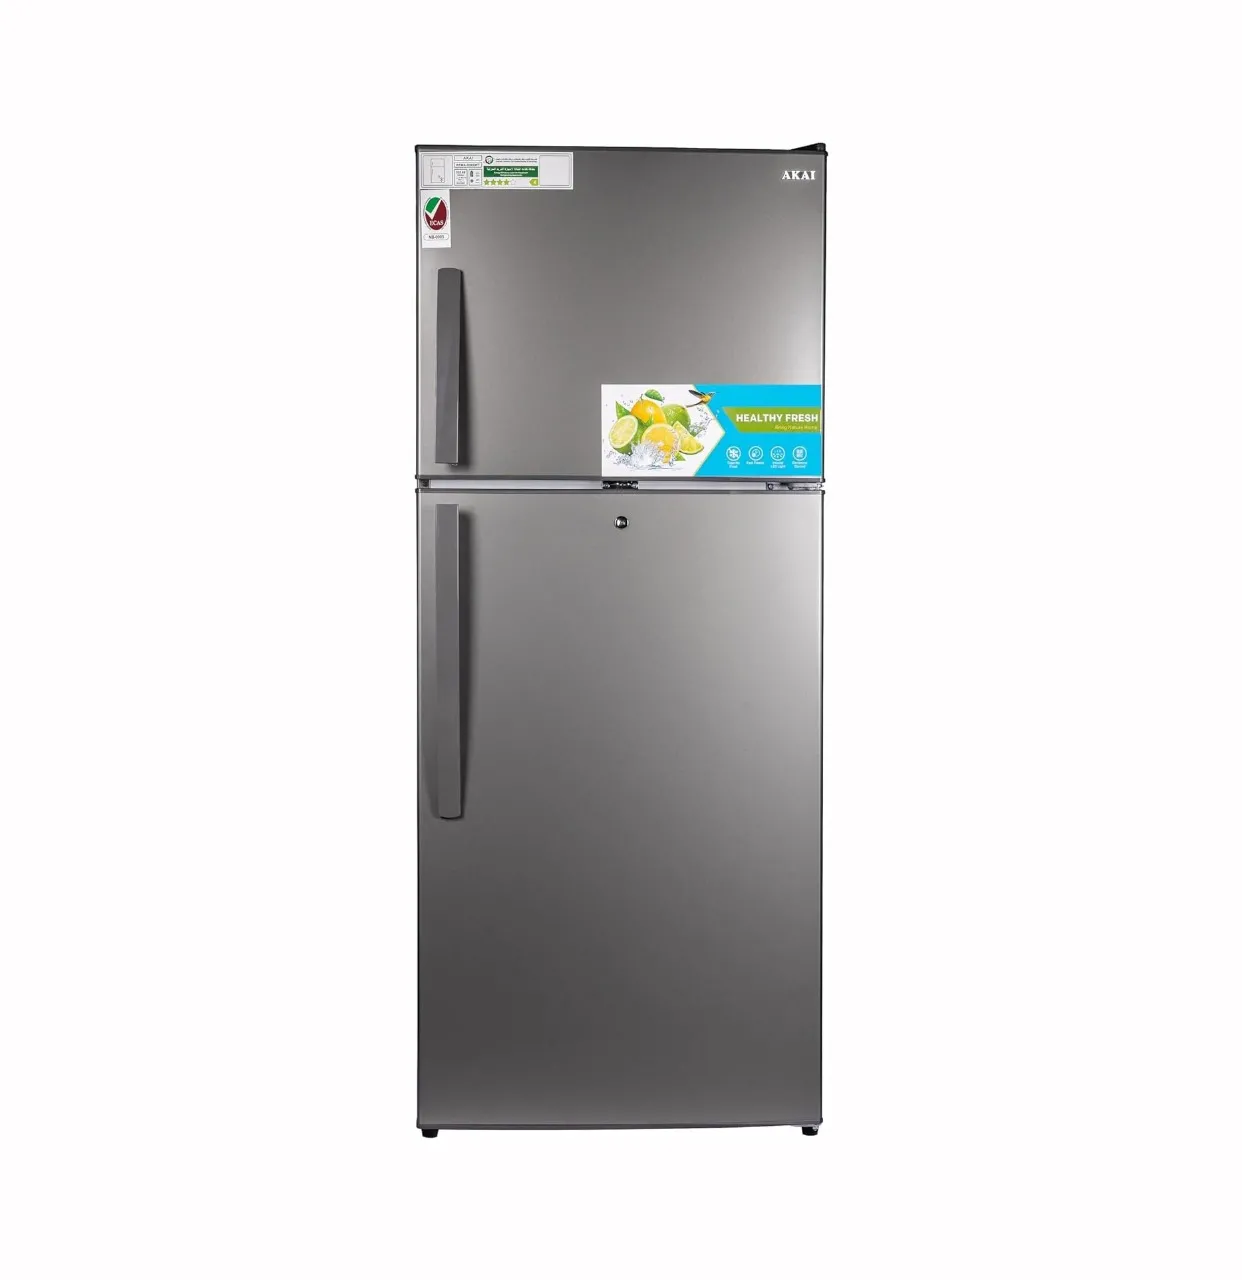 Akai 500 Liter Double Door Top Mount Refrigerator Glass Shelves Color Silver Model – RFMA-S500WT – 1 Year Full 5 Year Compressor Warranty..